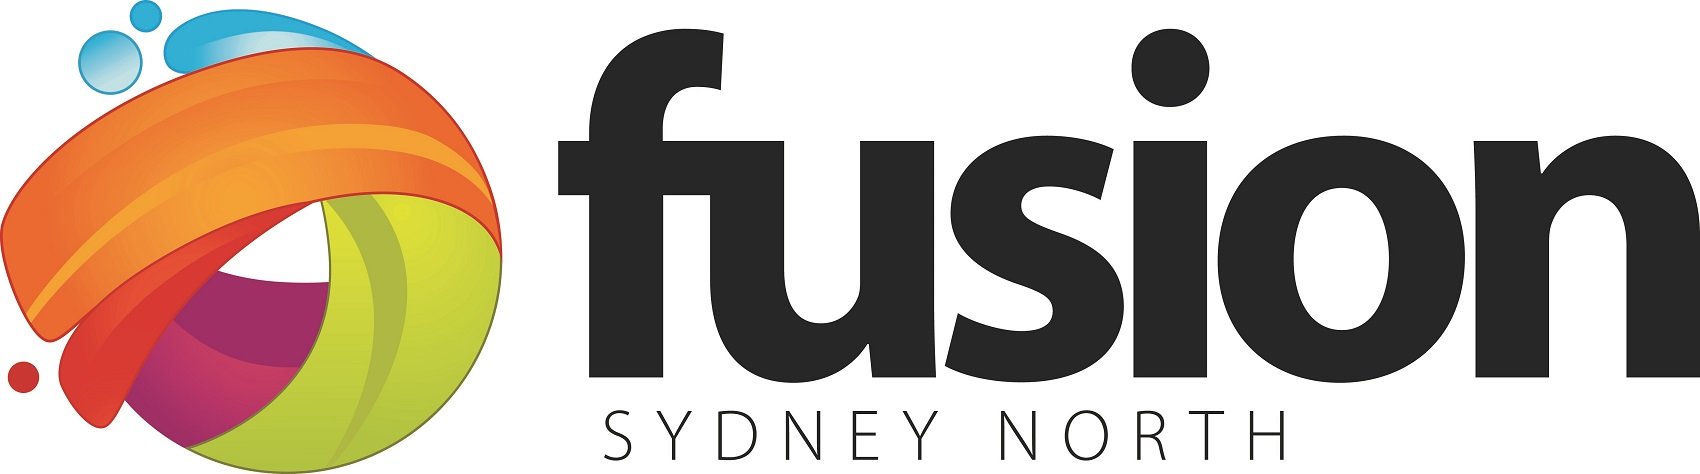 Sydney North Logo (small).jpg